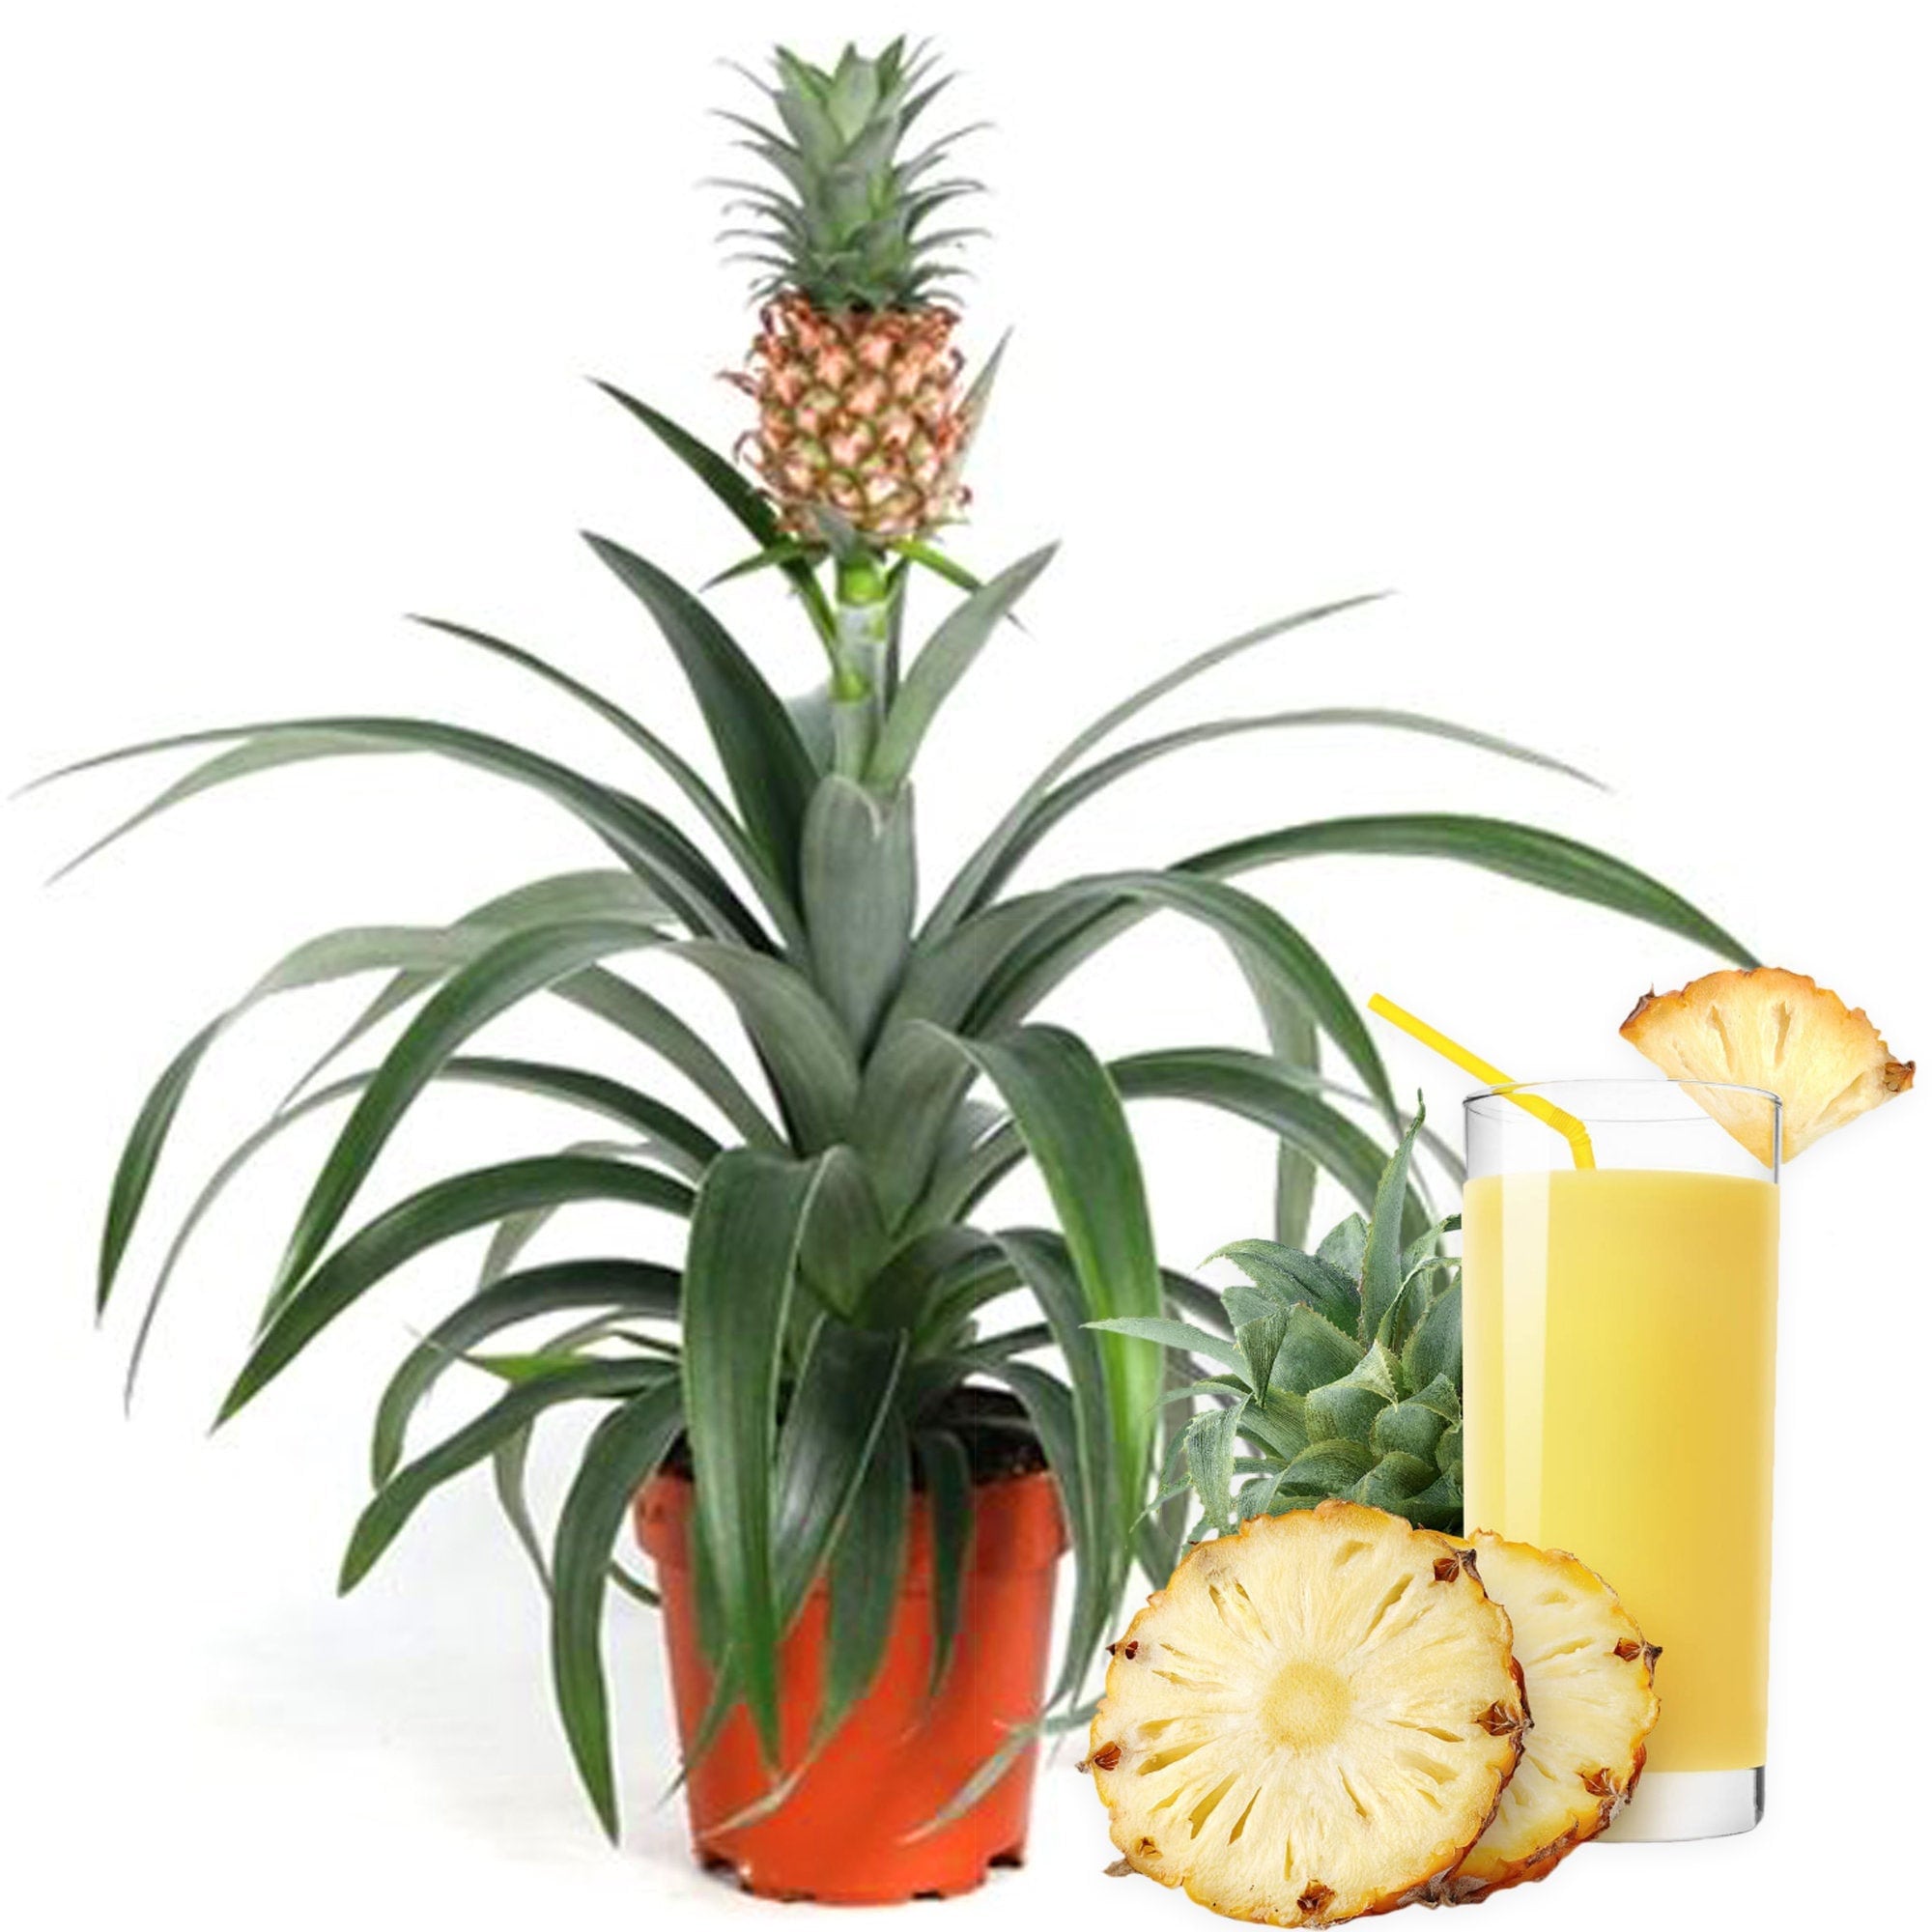 1 Ananas Comosus Amigo Evergreen Pineapple Plant - Etsy Denmark